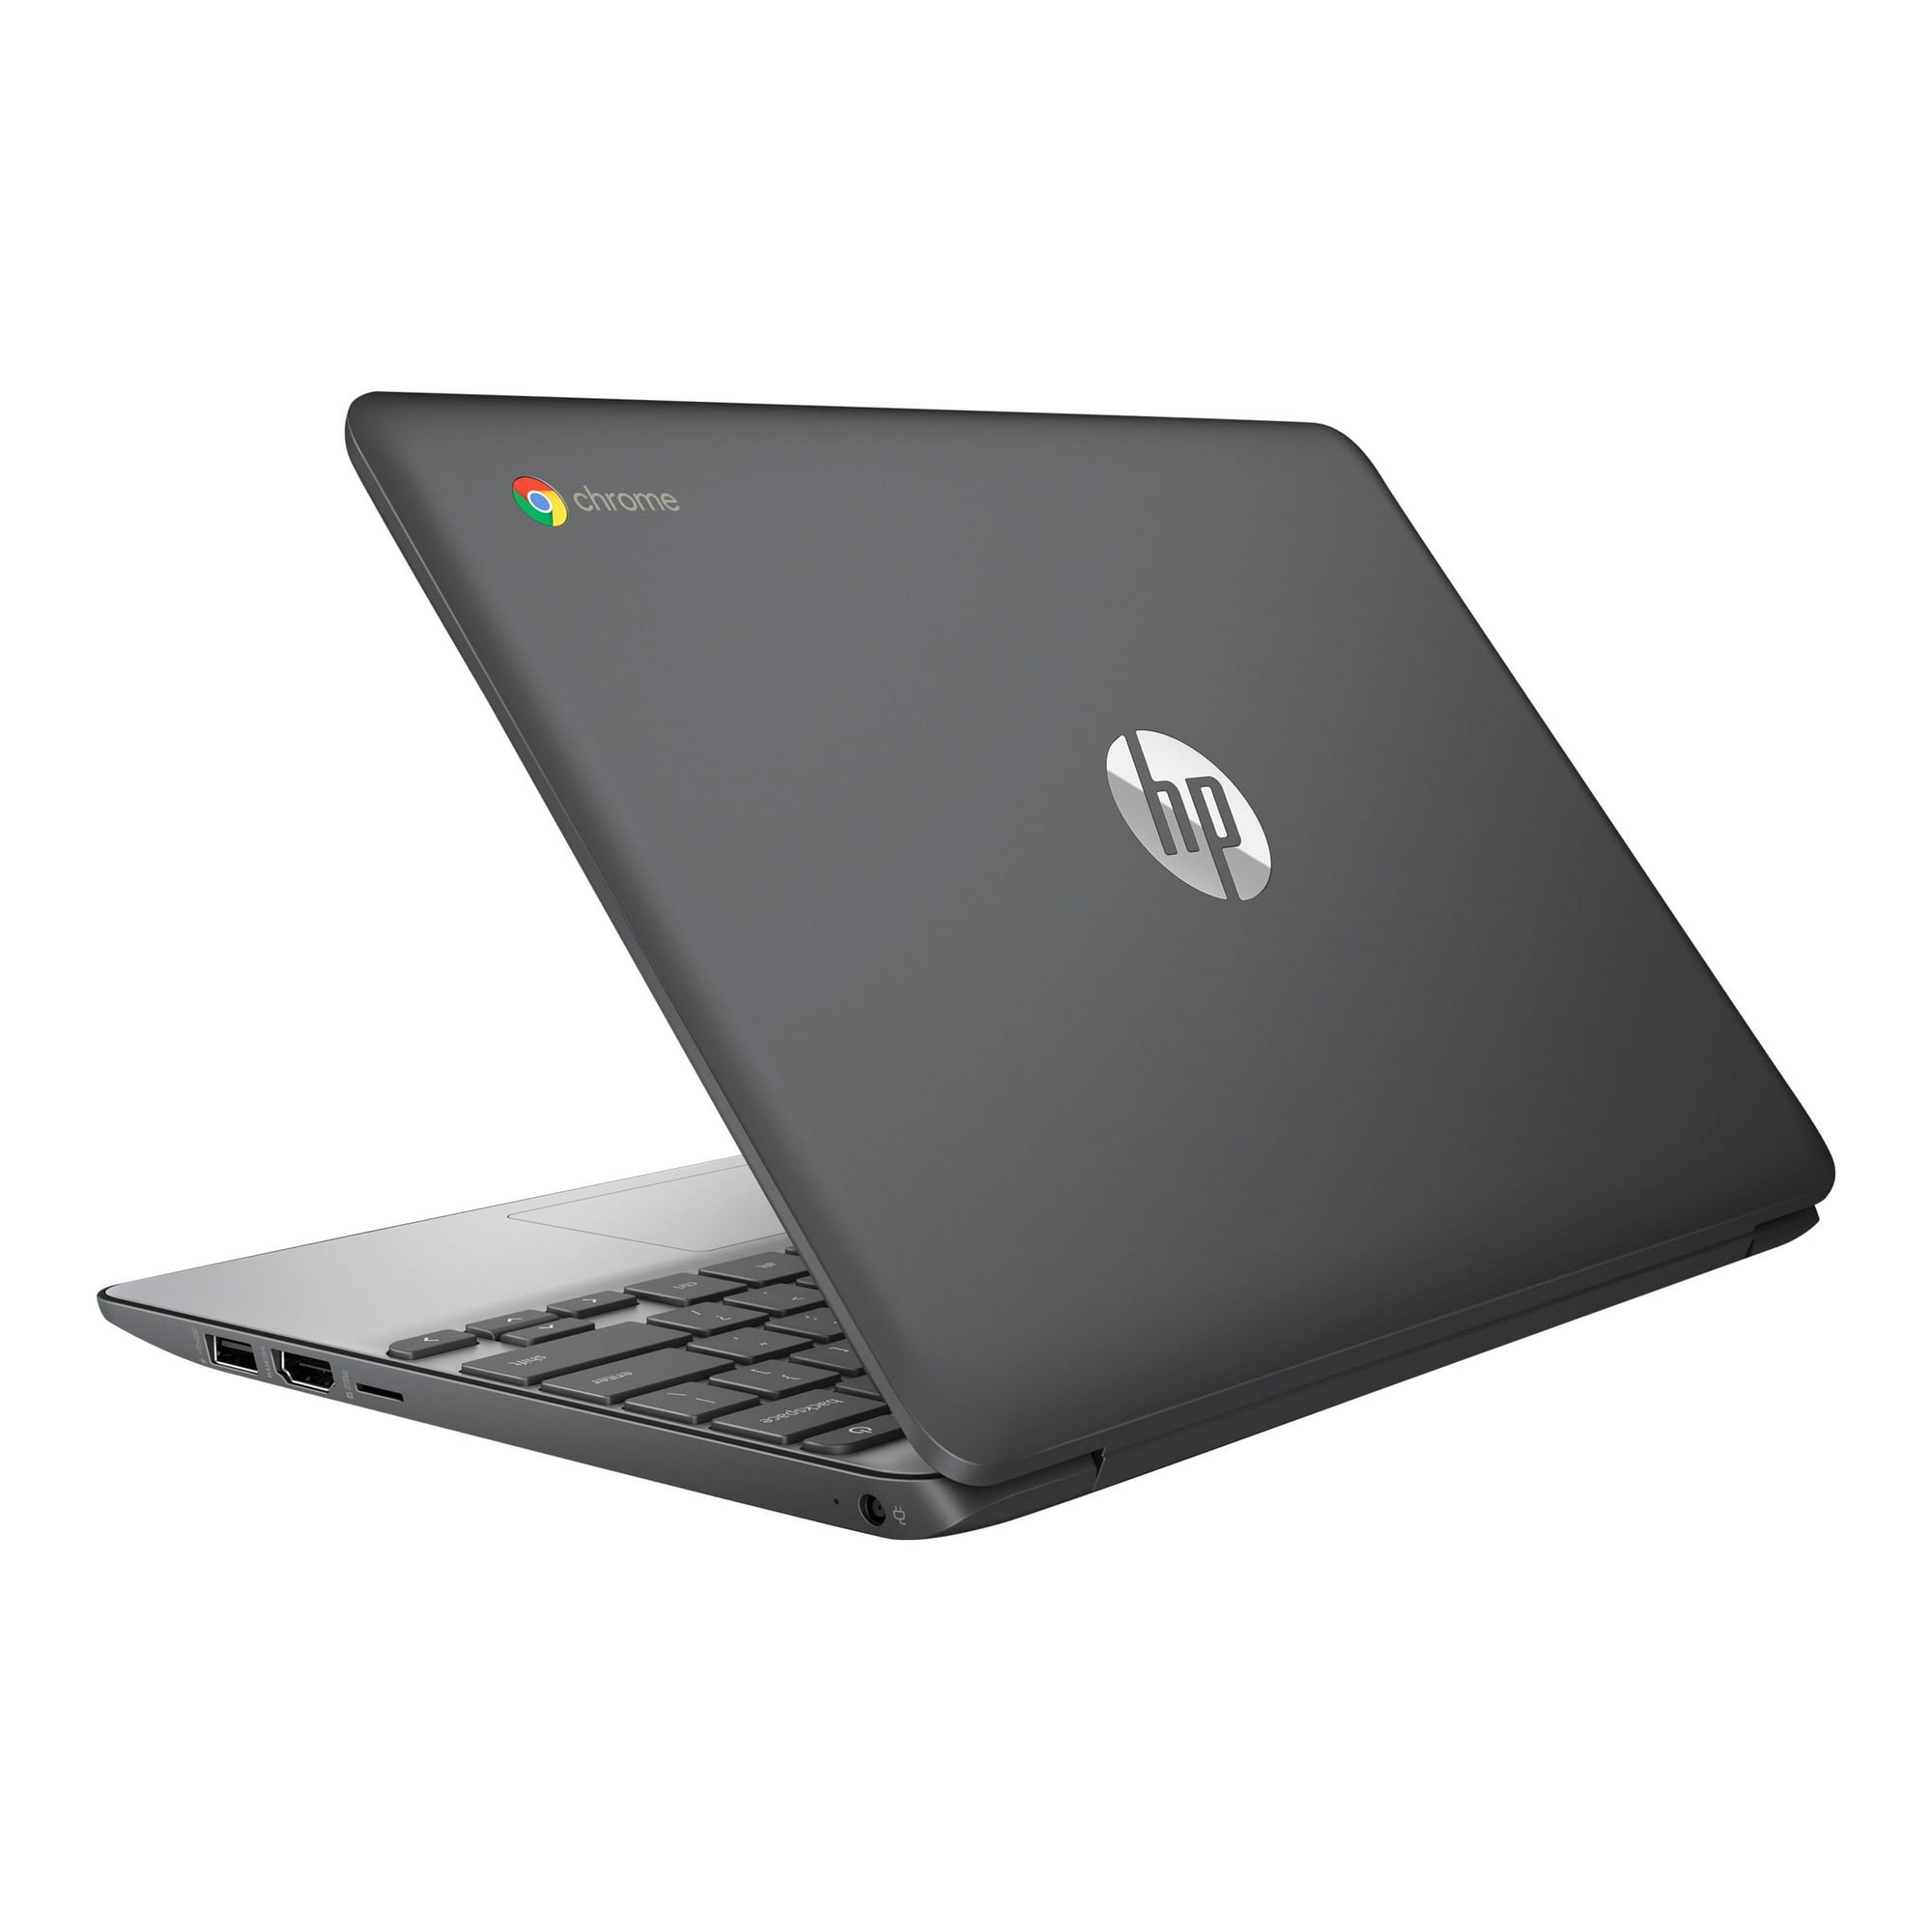 HP Chromebook 11 G5 - Intel Celeron N3060 / 1.6 GHz - Chrome OS 